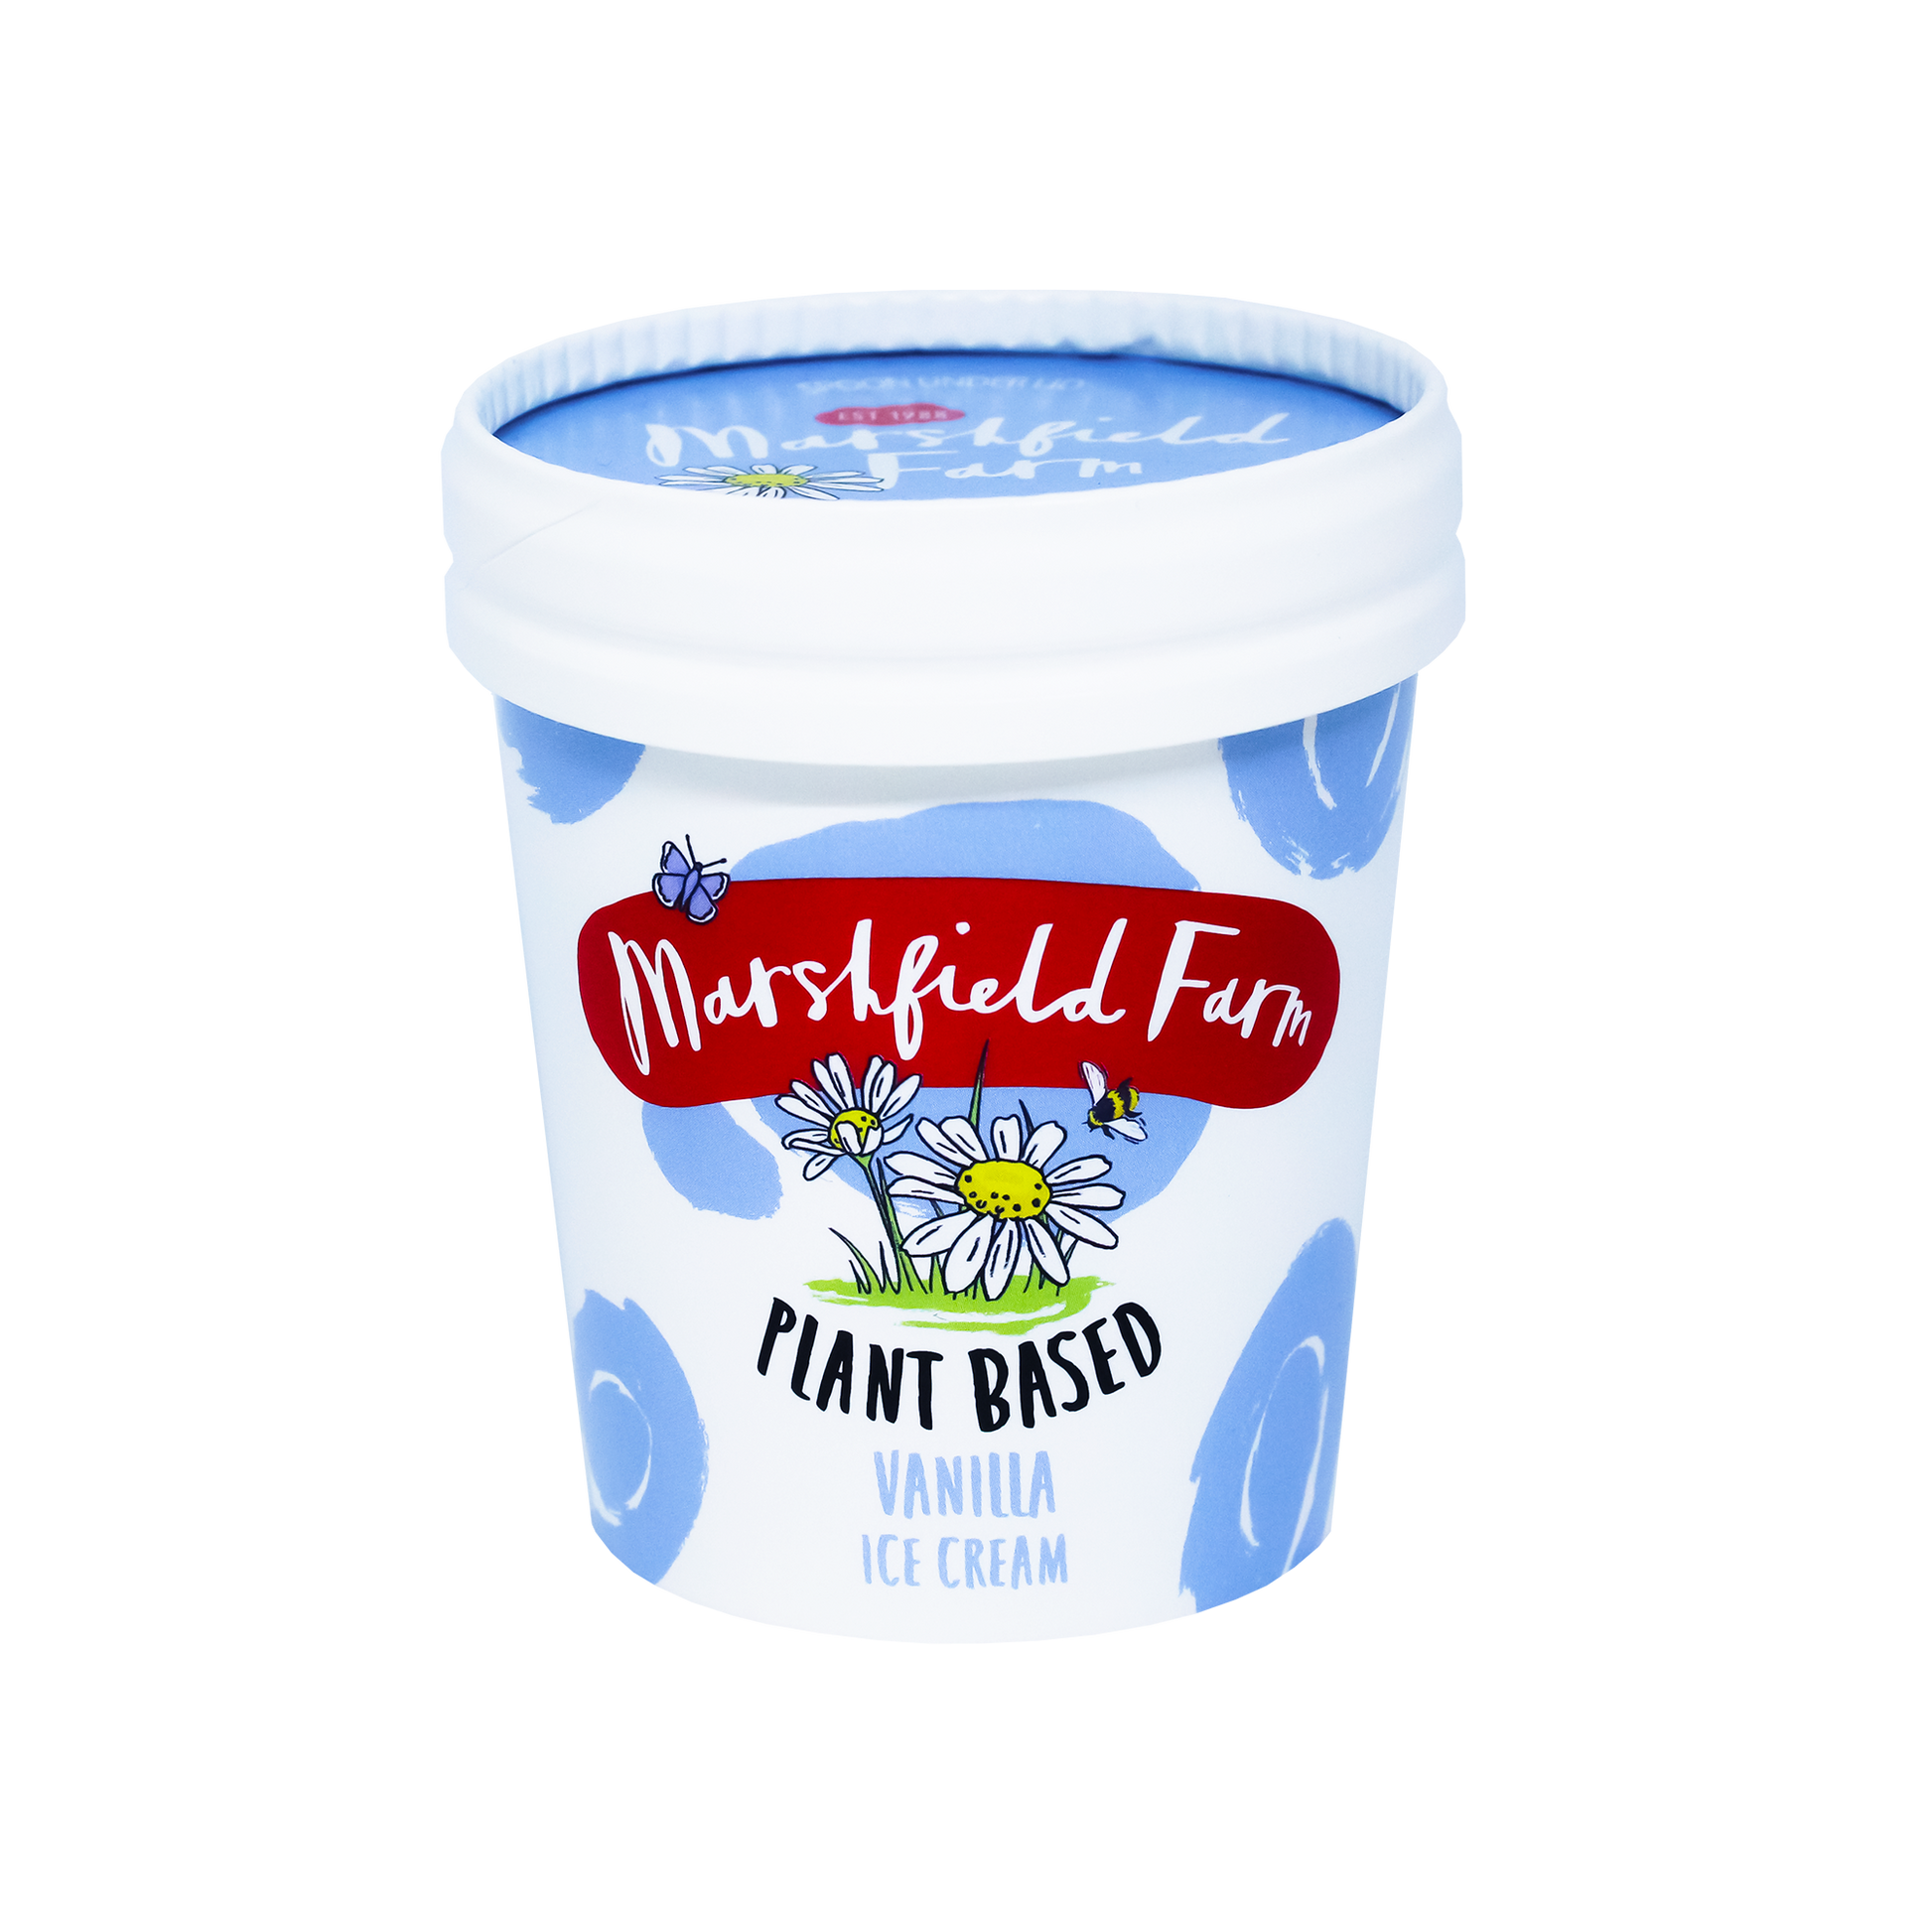 Marshfield Farm Plant Based Vanilla Ice Cream 125ml Tub